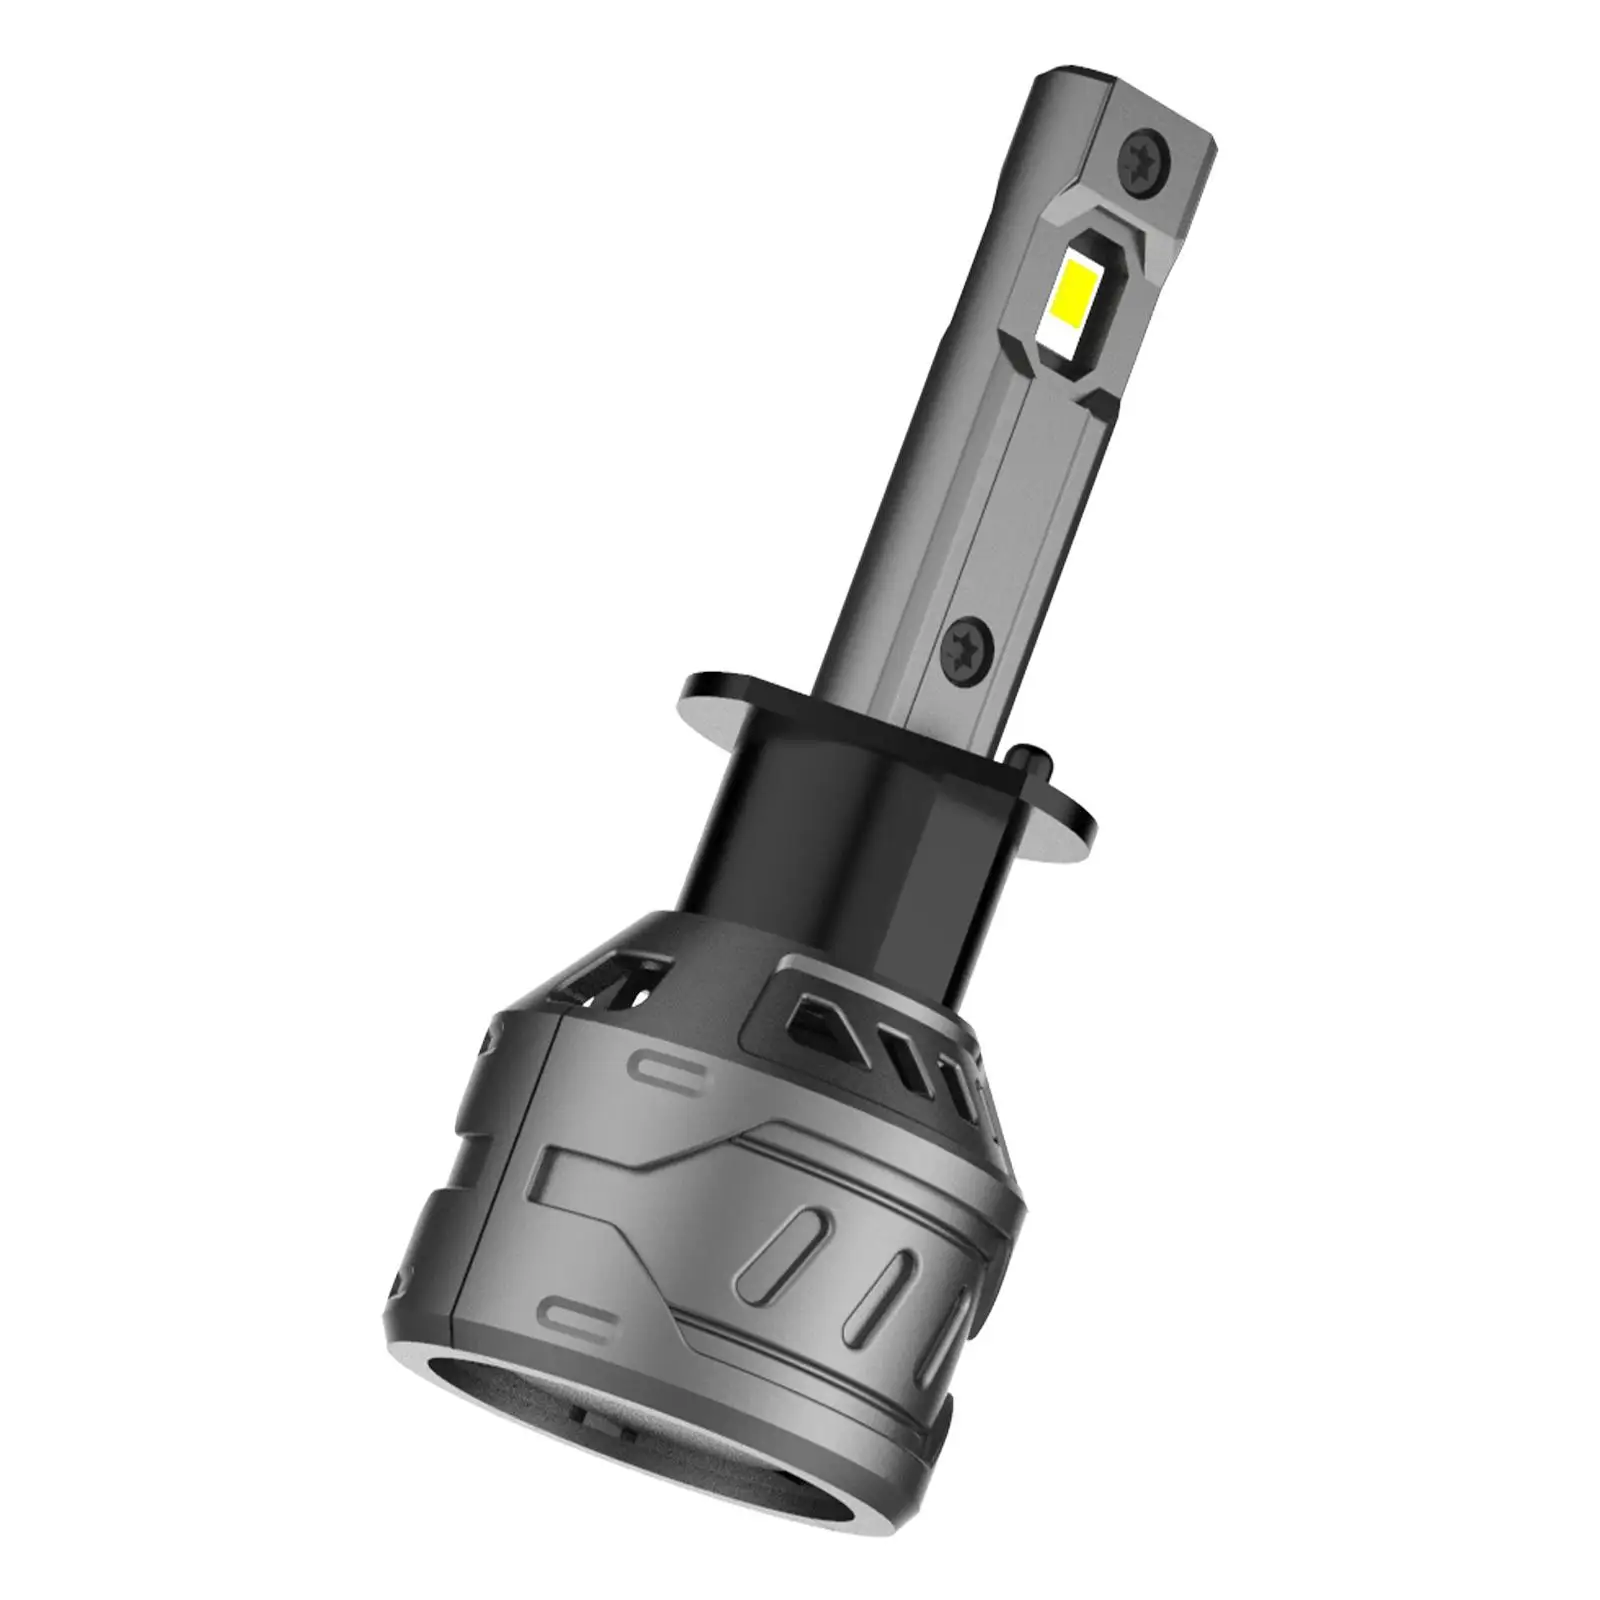 2x Bulbs 100000+ Hour Lifespan High/Low Beam Waterproof LED Conversion 60W Fog Lamp Light for Vehicle